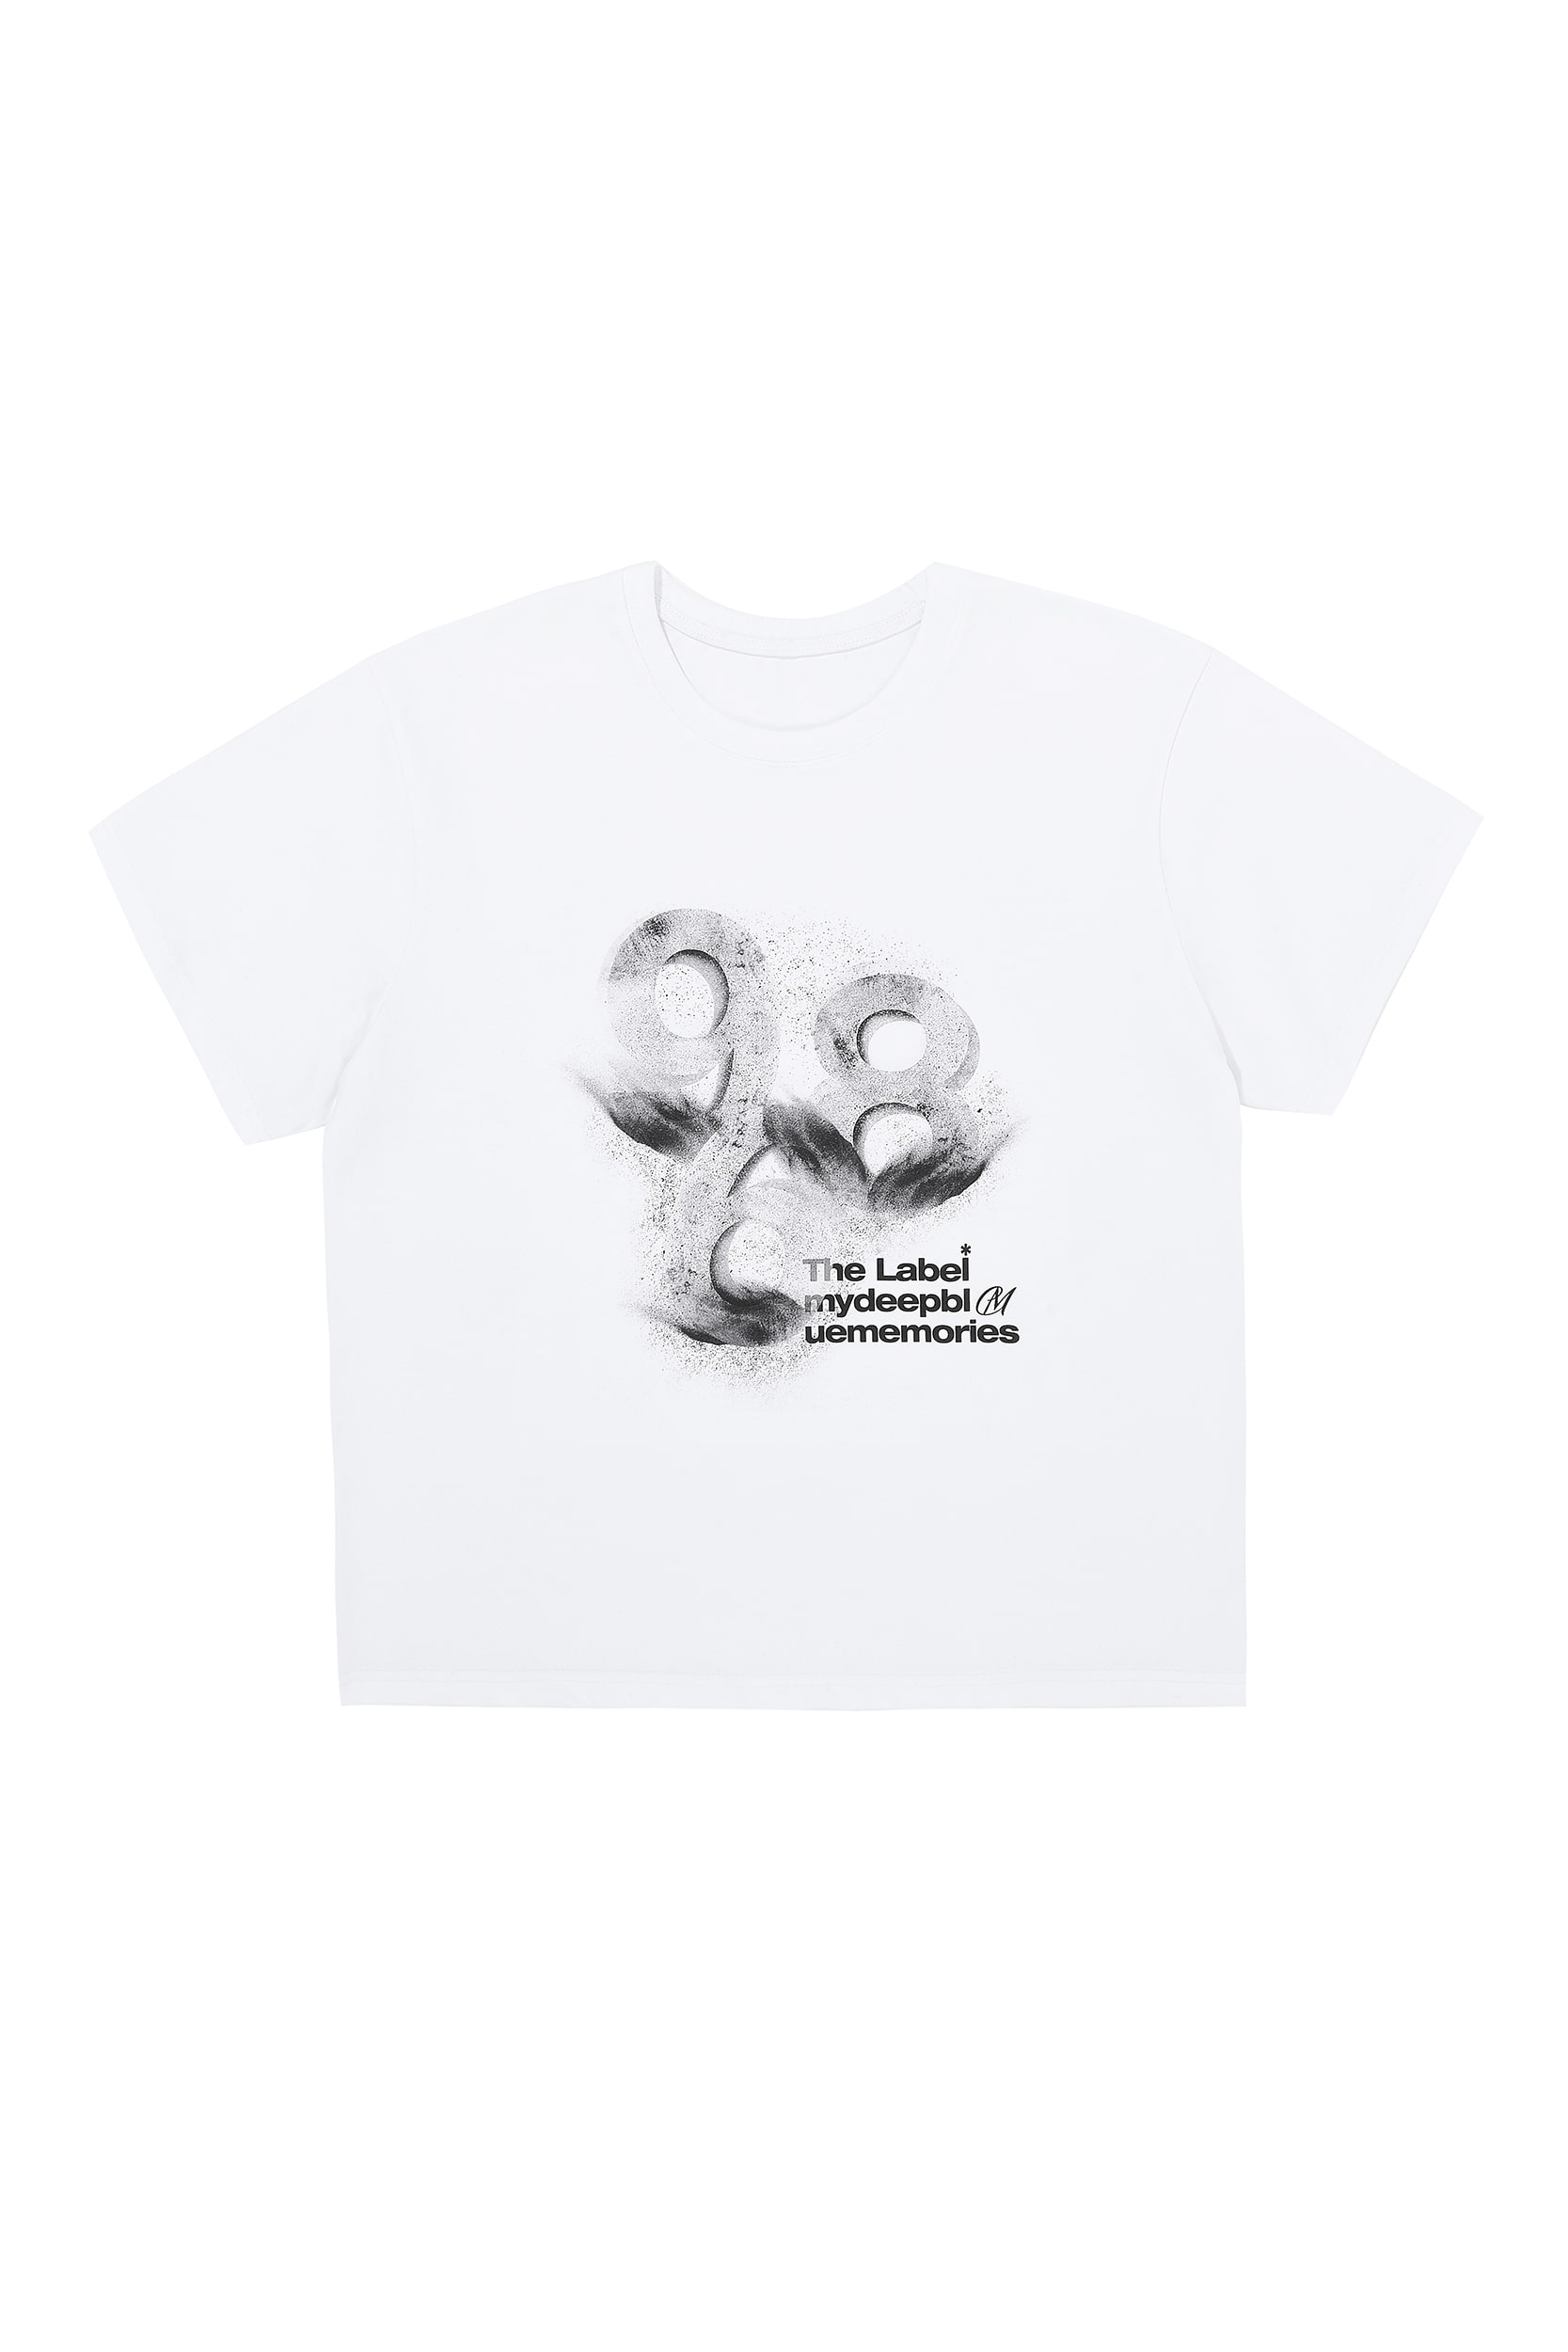 986 hotfix t-shirts in white